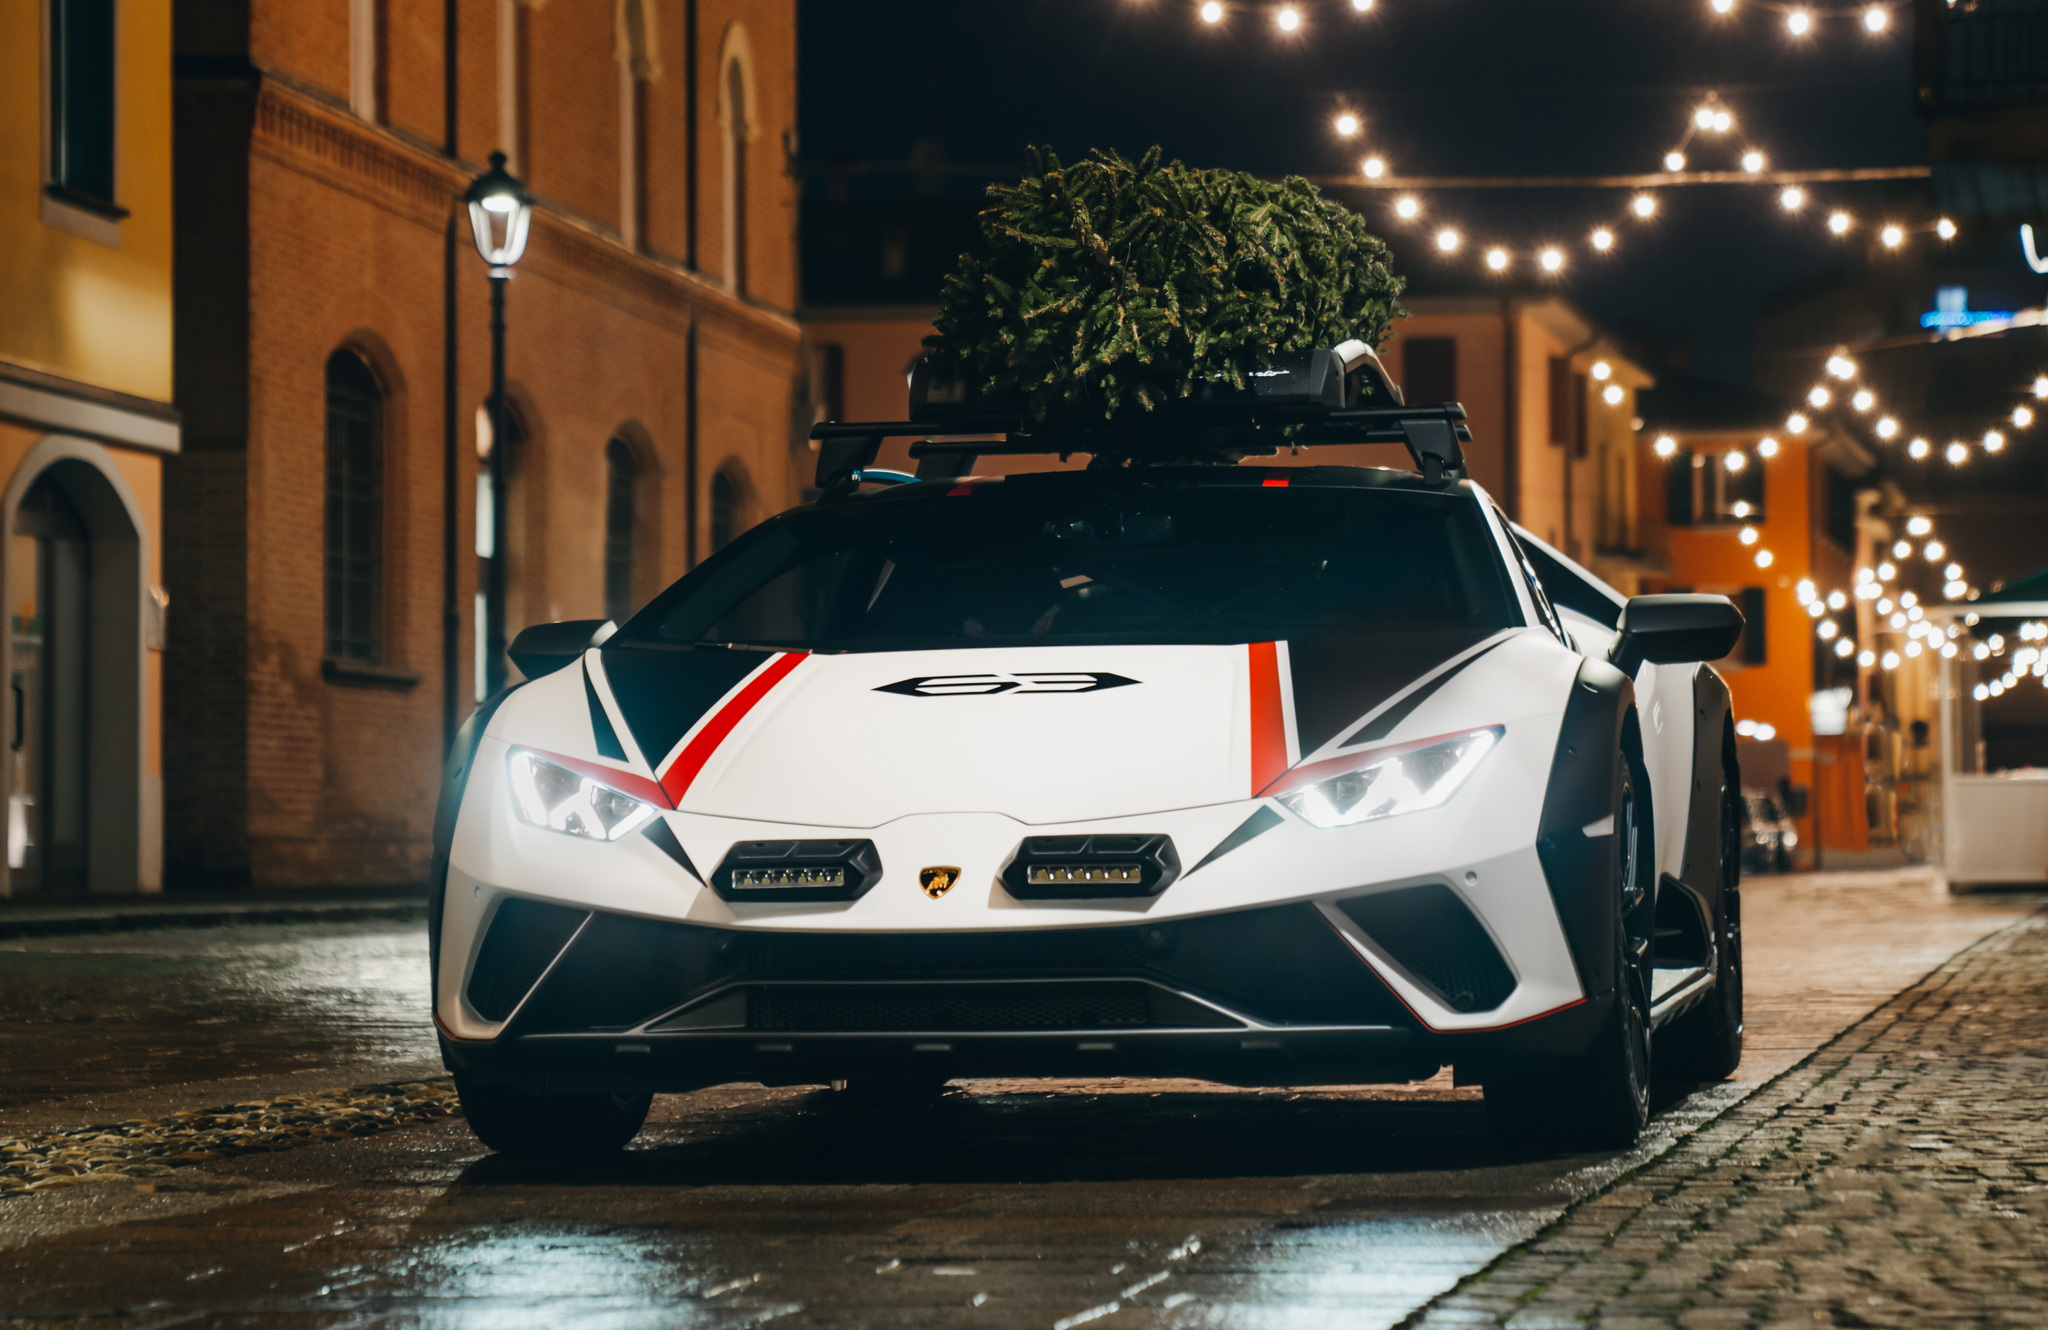 Lamborghini ขอส่งความสุขให้ทุกคนช่วง Holiday ด้วยคลิปวิดีโอนี้!!